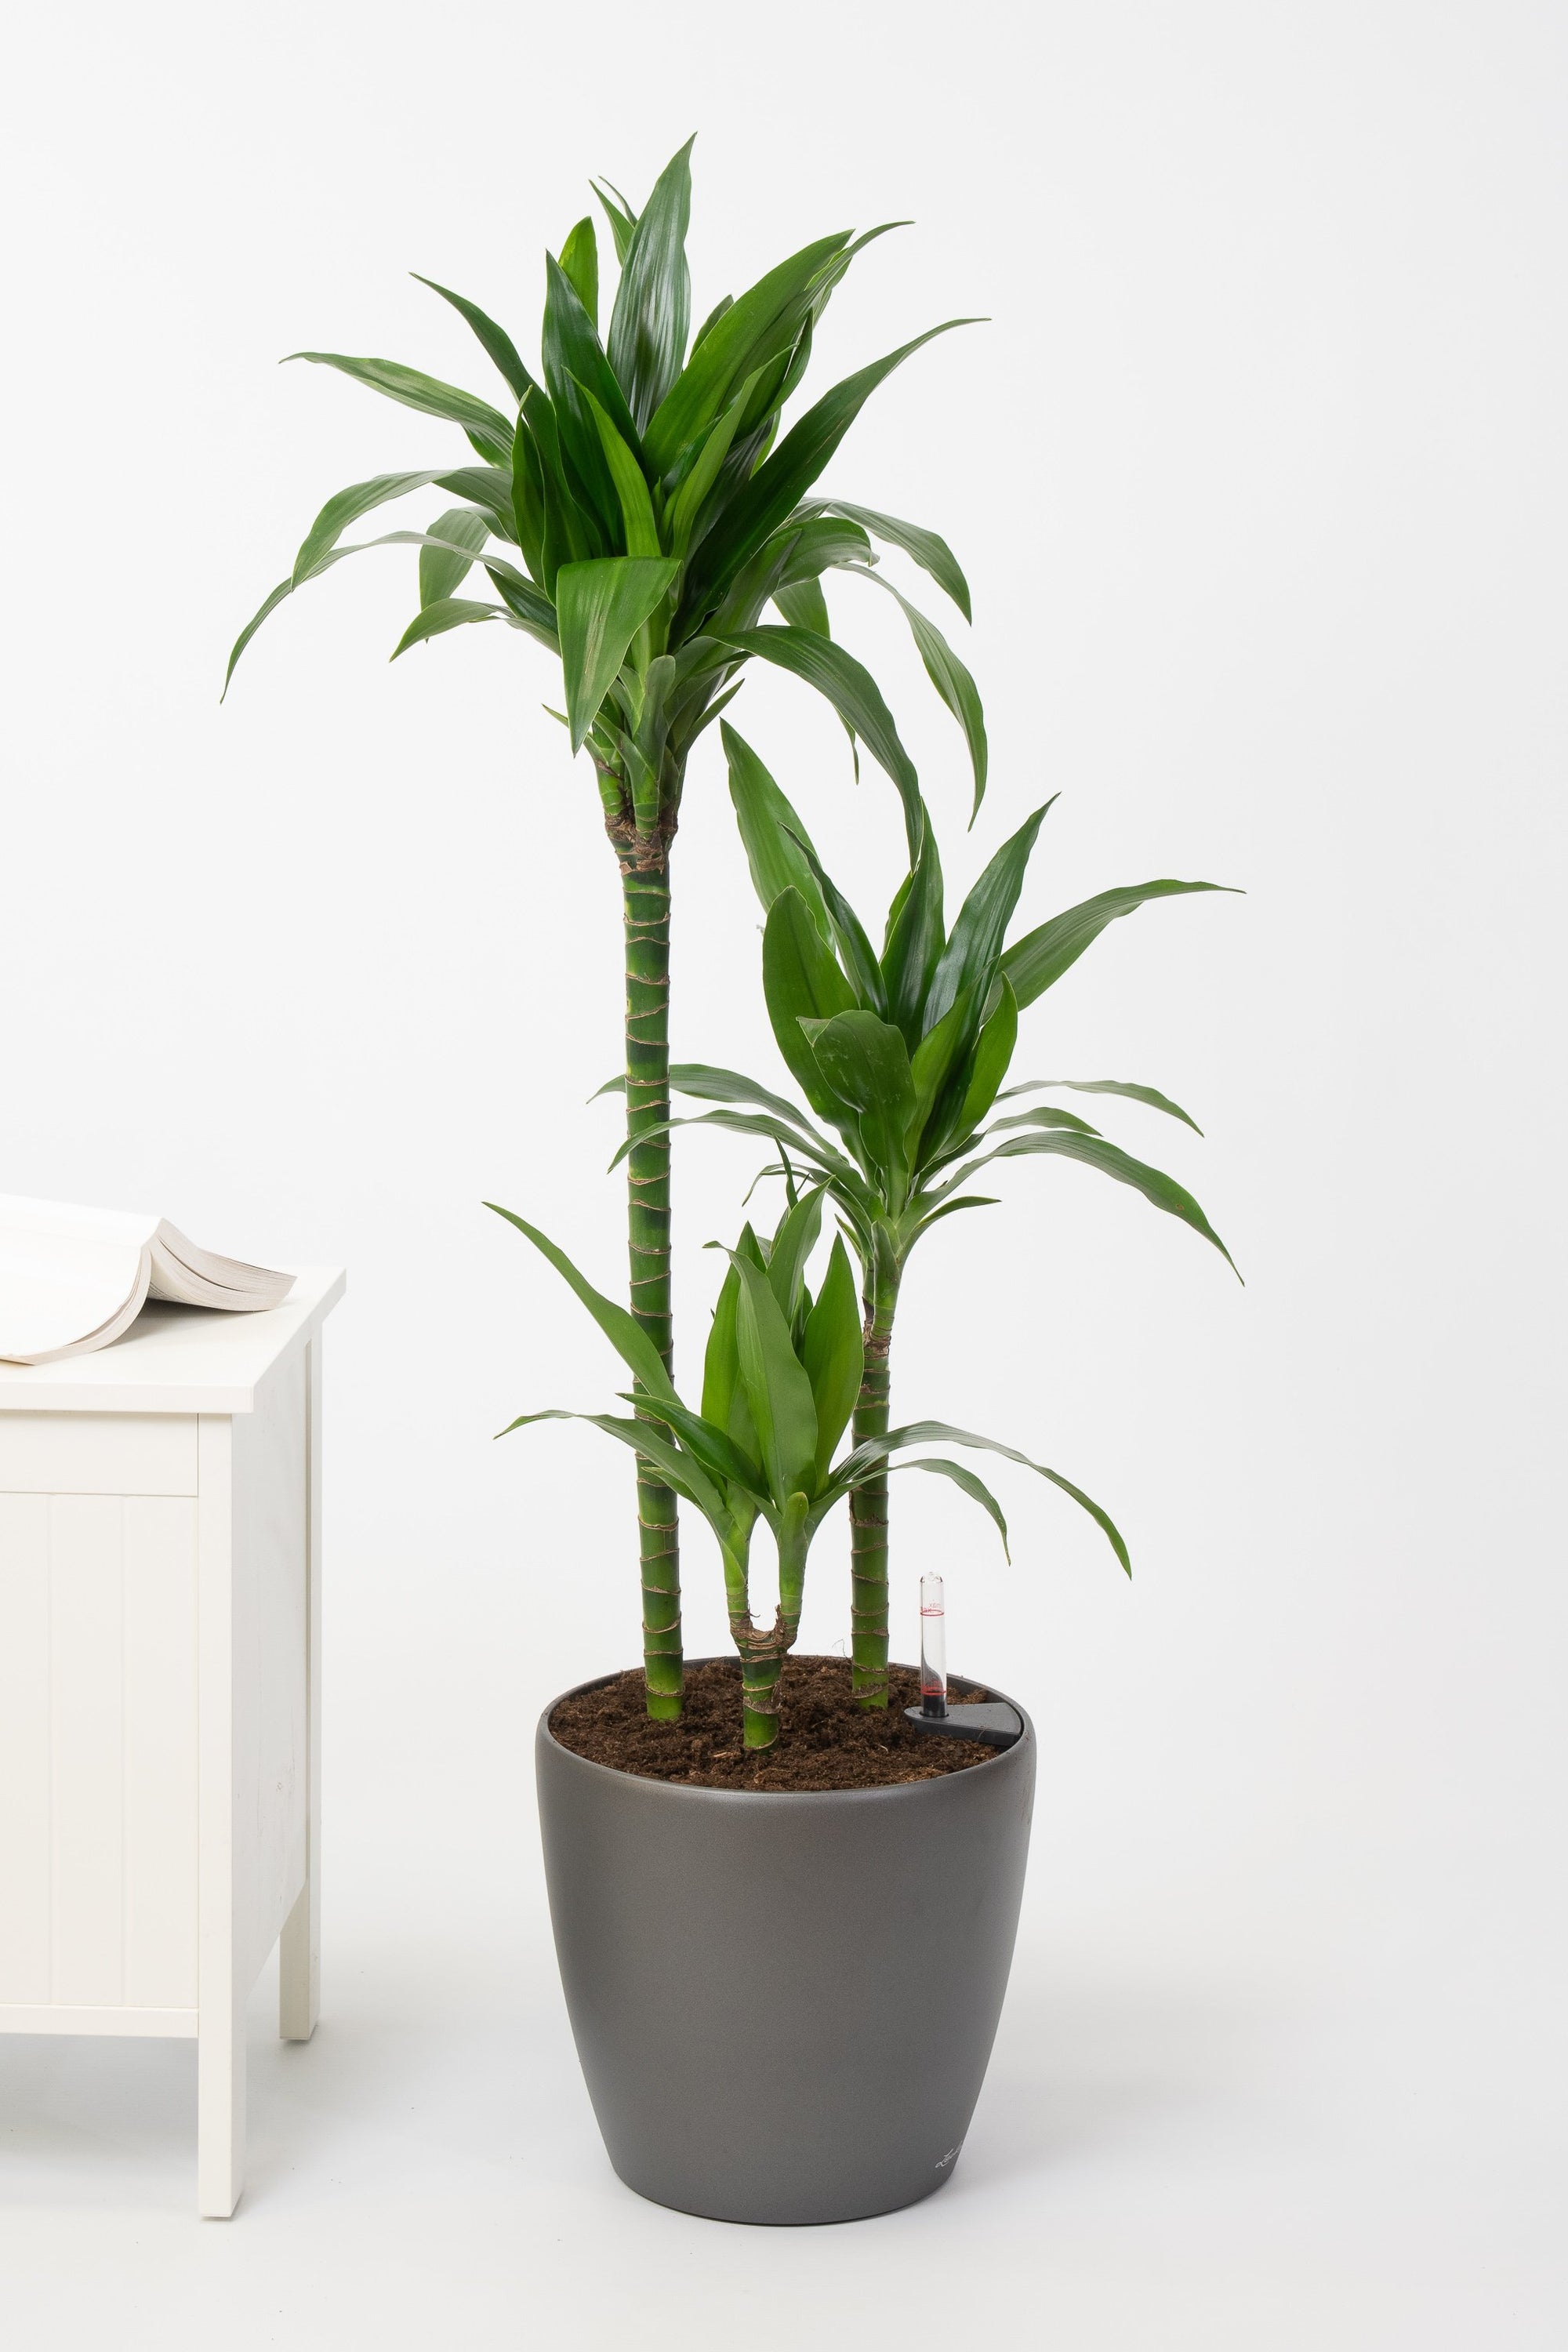 Dracaena janet craig dragon tree indoor plant in Self watering plant pot